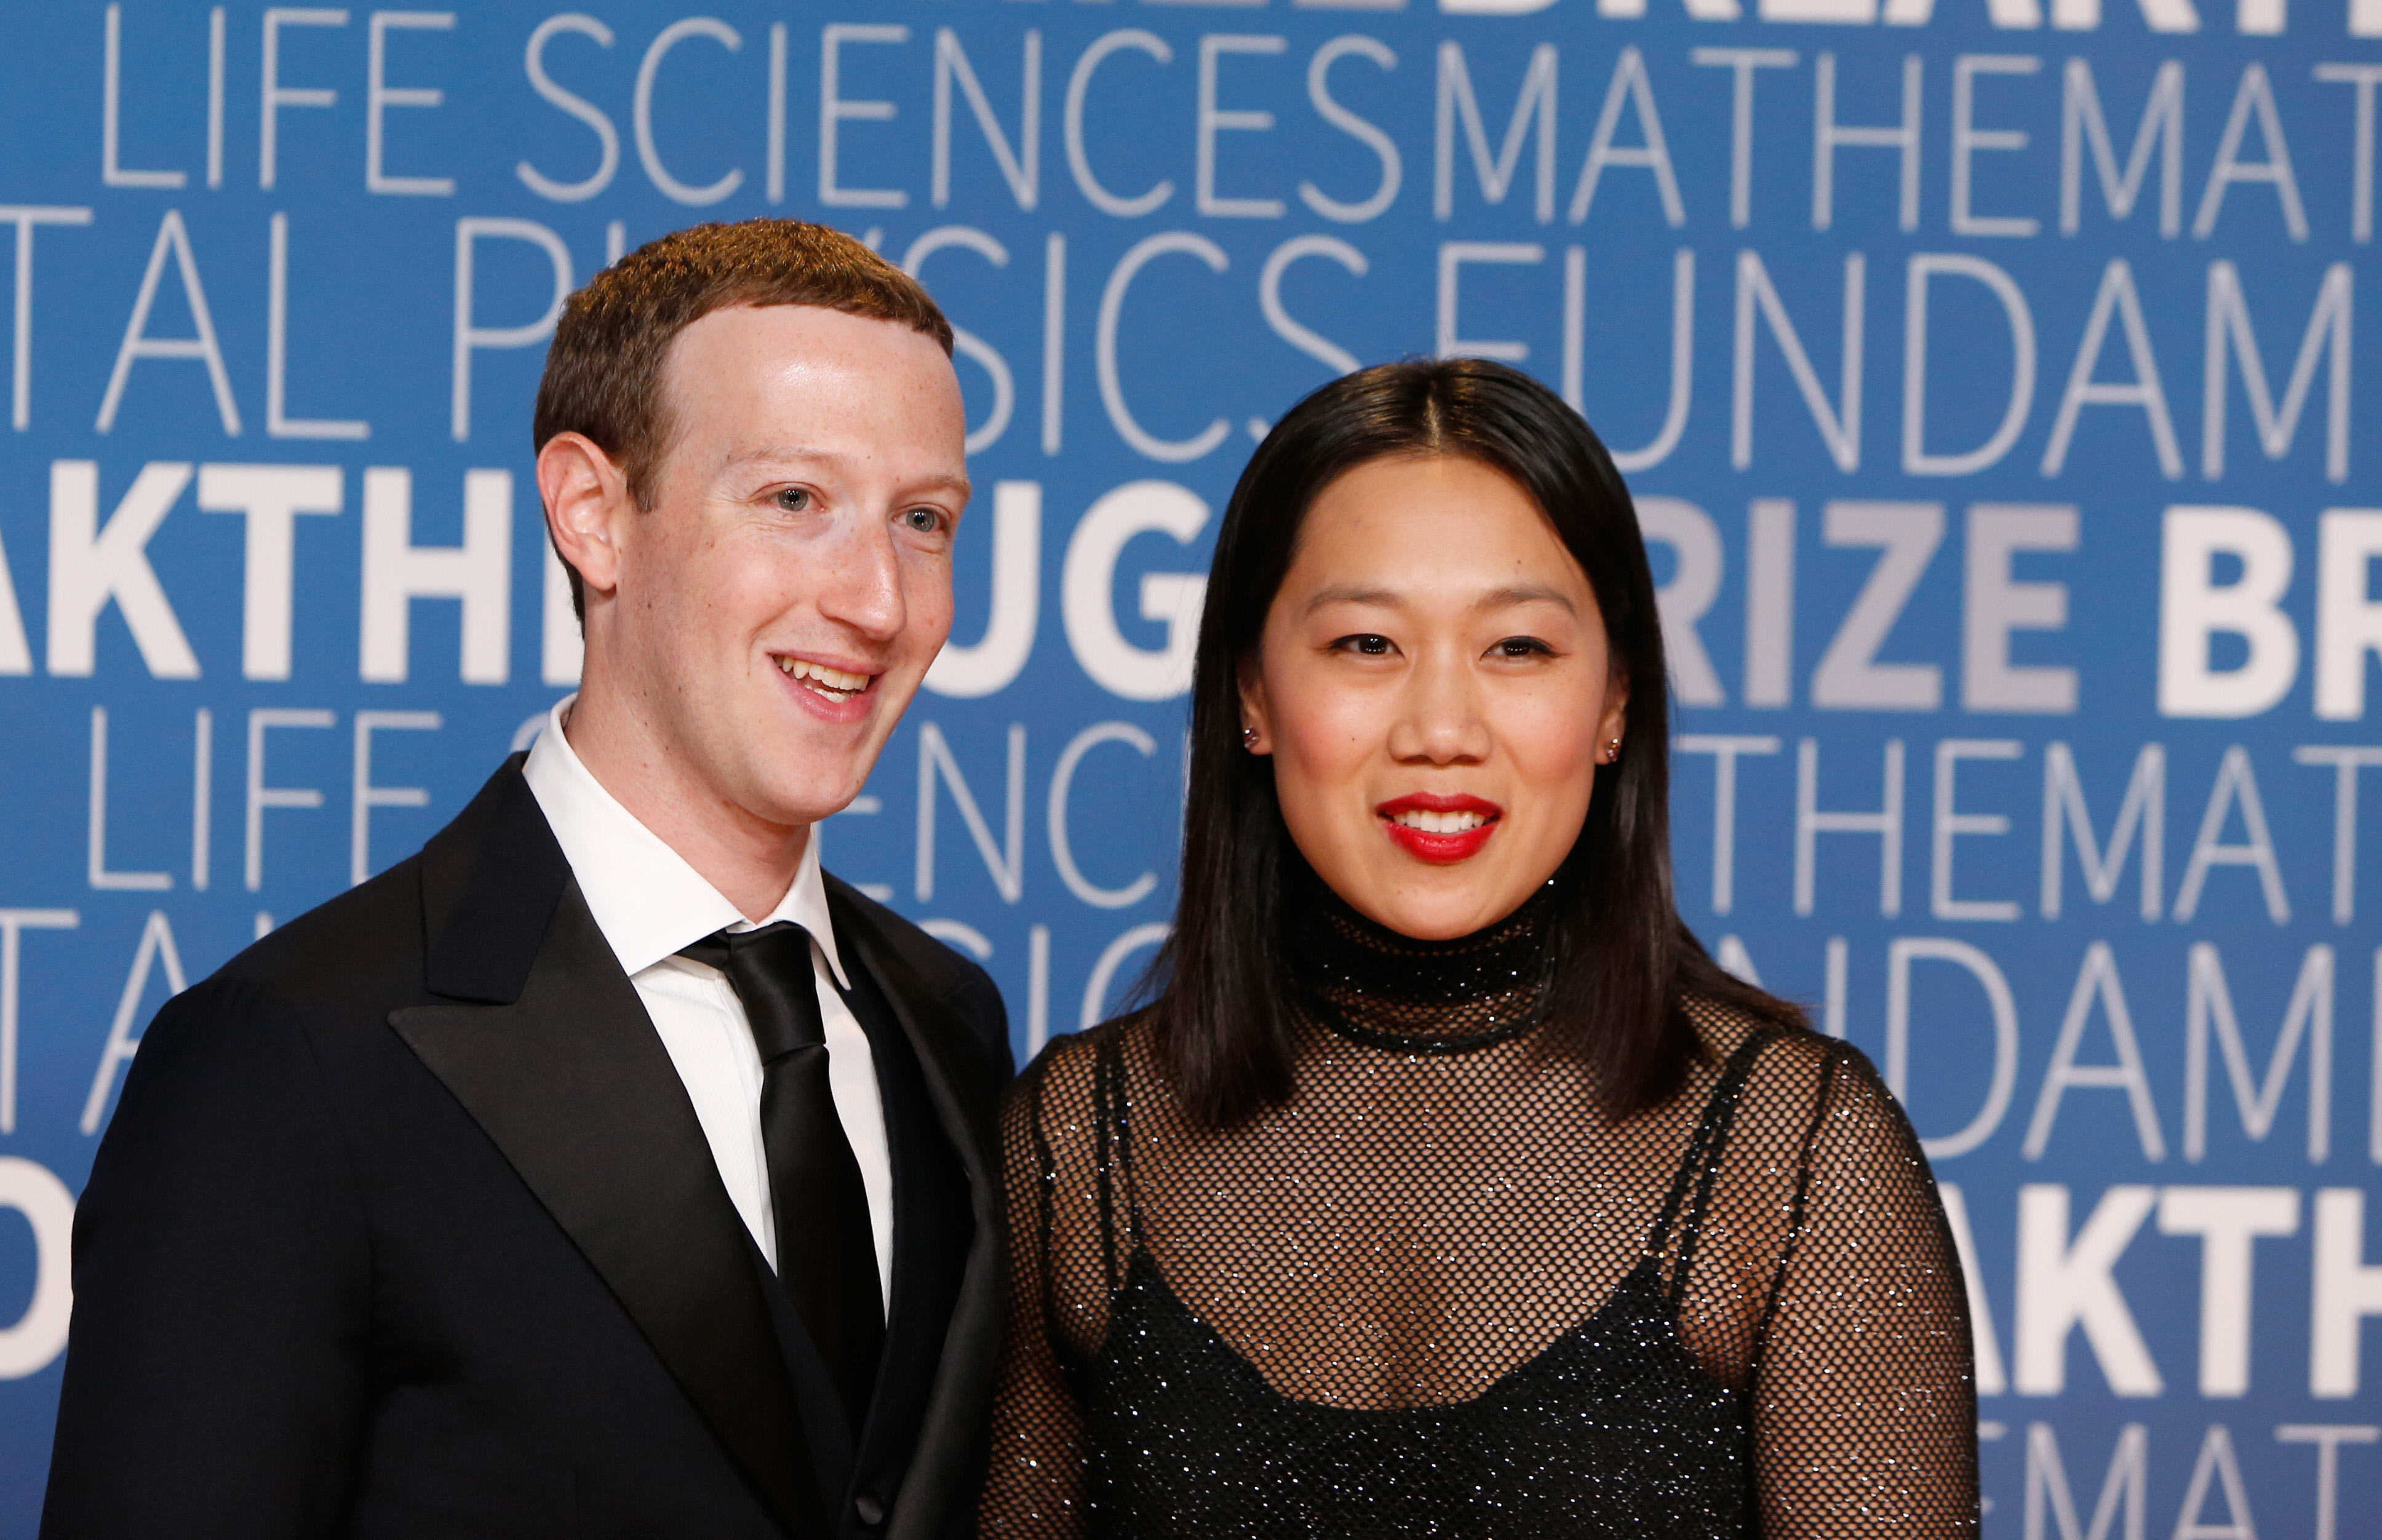 Mark Zuckerberg and Priscilla Chan disgusted by Trump's rhetoric